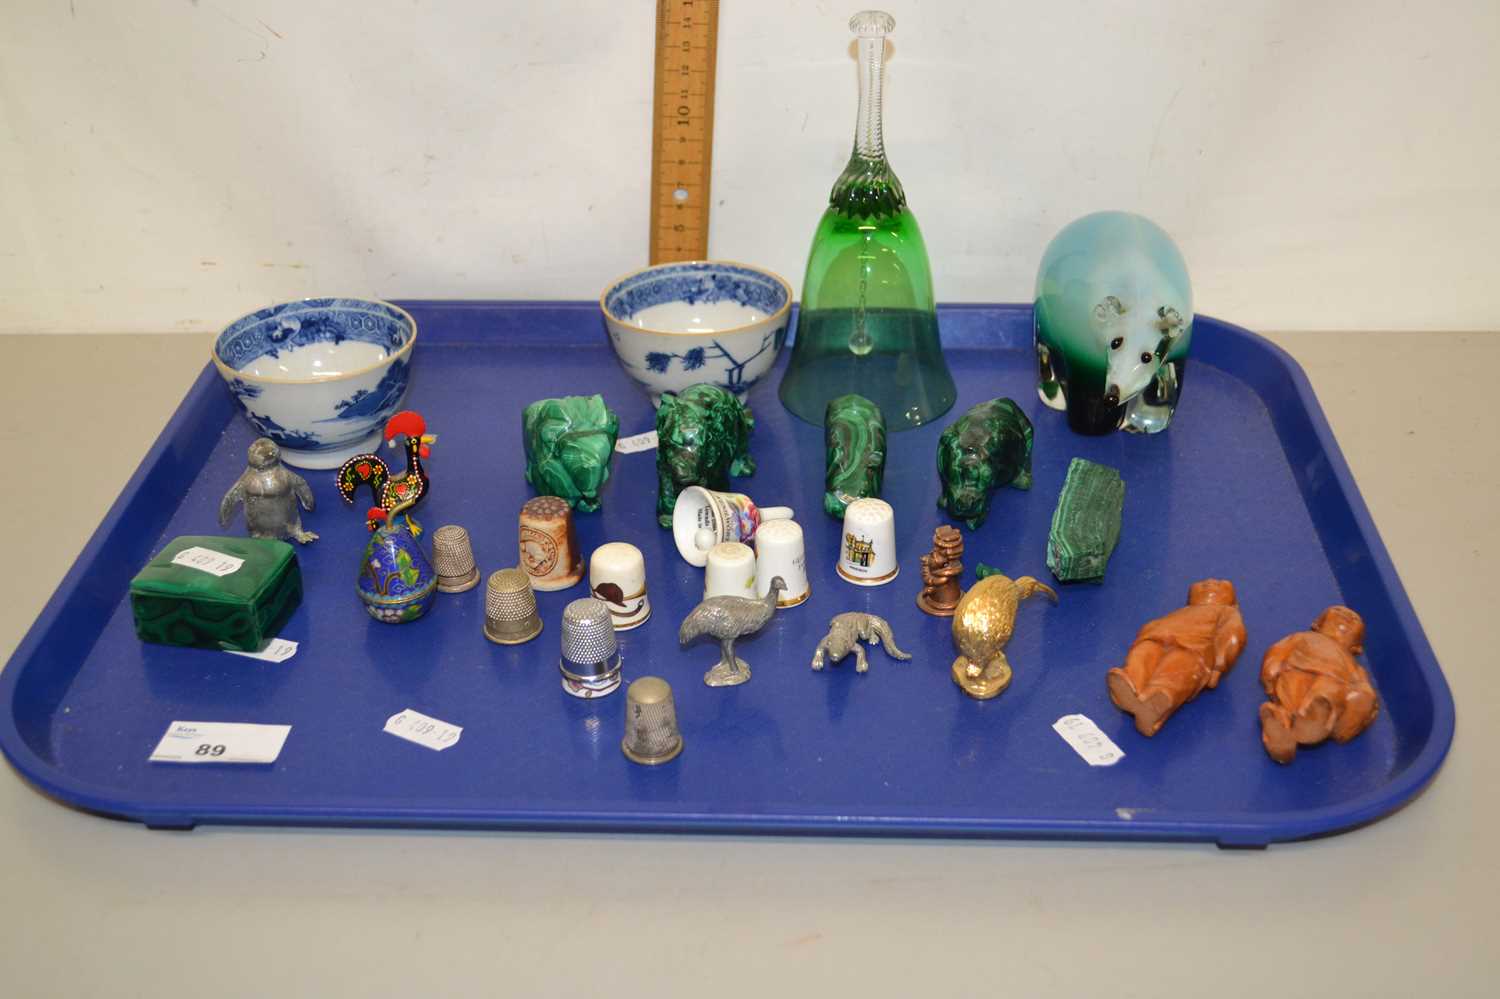 Mixed Lot: Various assorted small animal models, transfer printed tea bowls etc